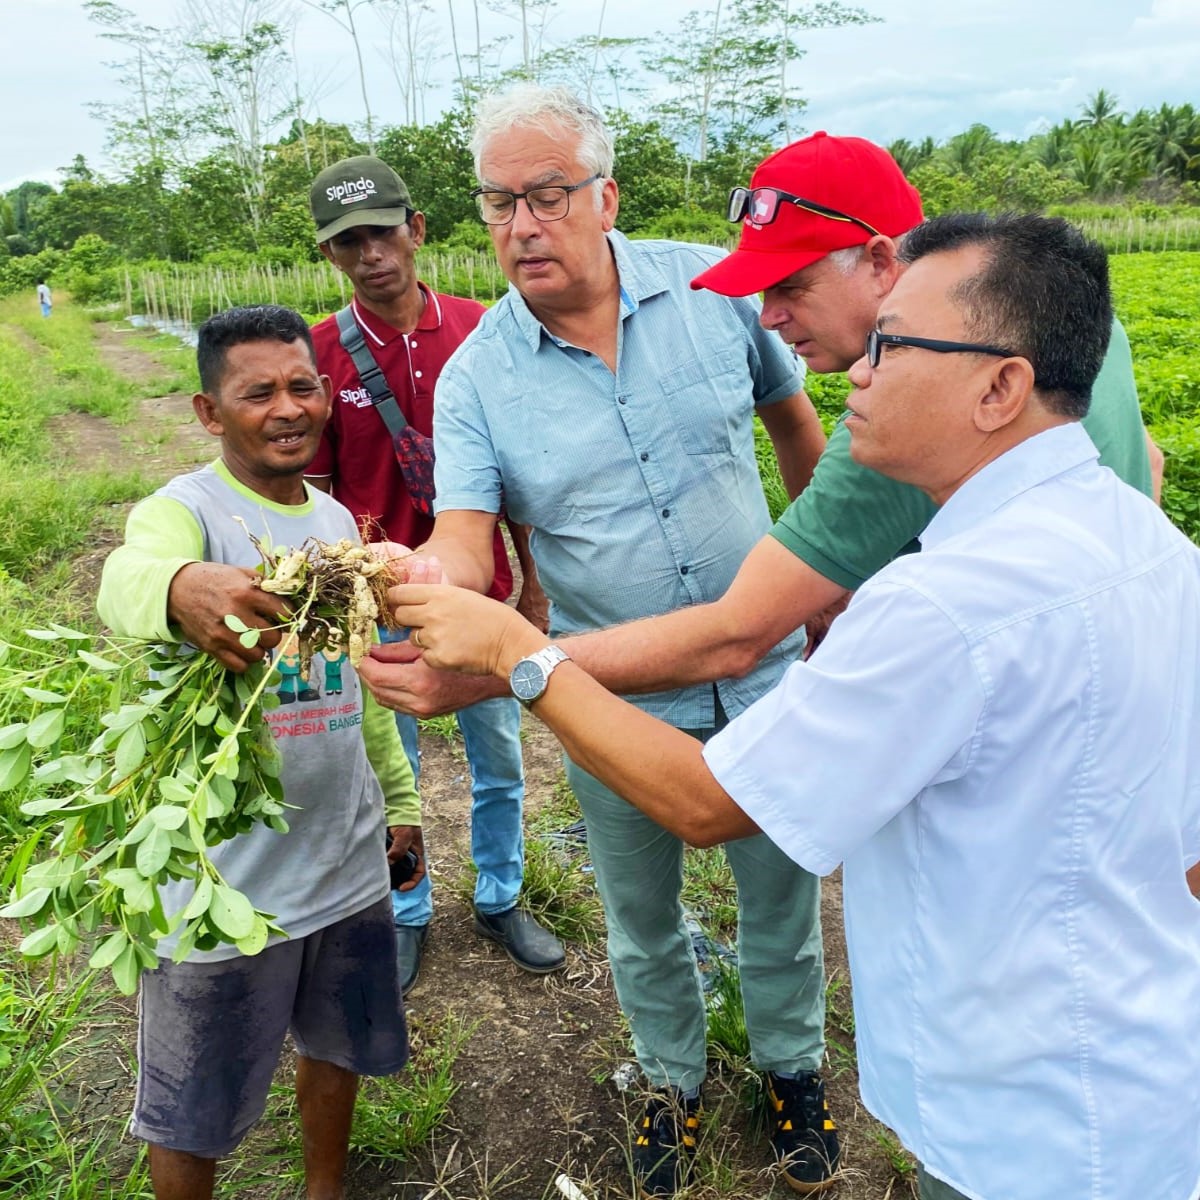 EWS-KT Board Advisor Flip van Koesveld, EWS-KT Director Stuart Morris, and Yayasan Bina Tani Sejahtera Extension Manager Edwin Saragih look at the plant held by a farmer in Indonesia.